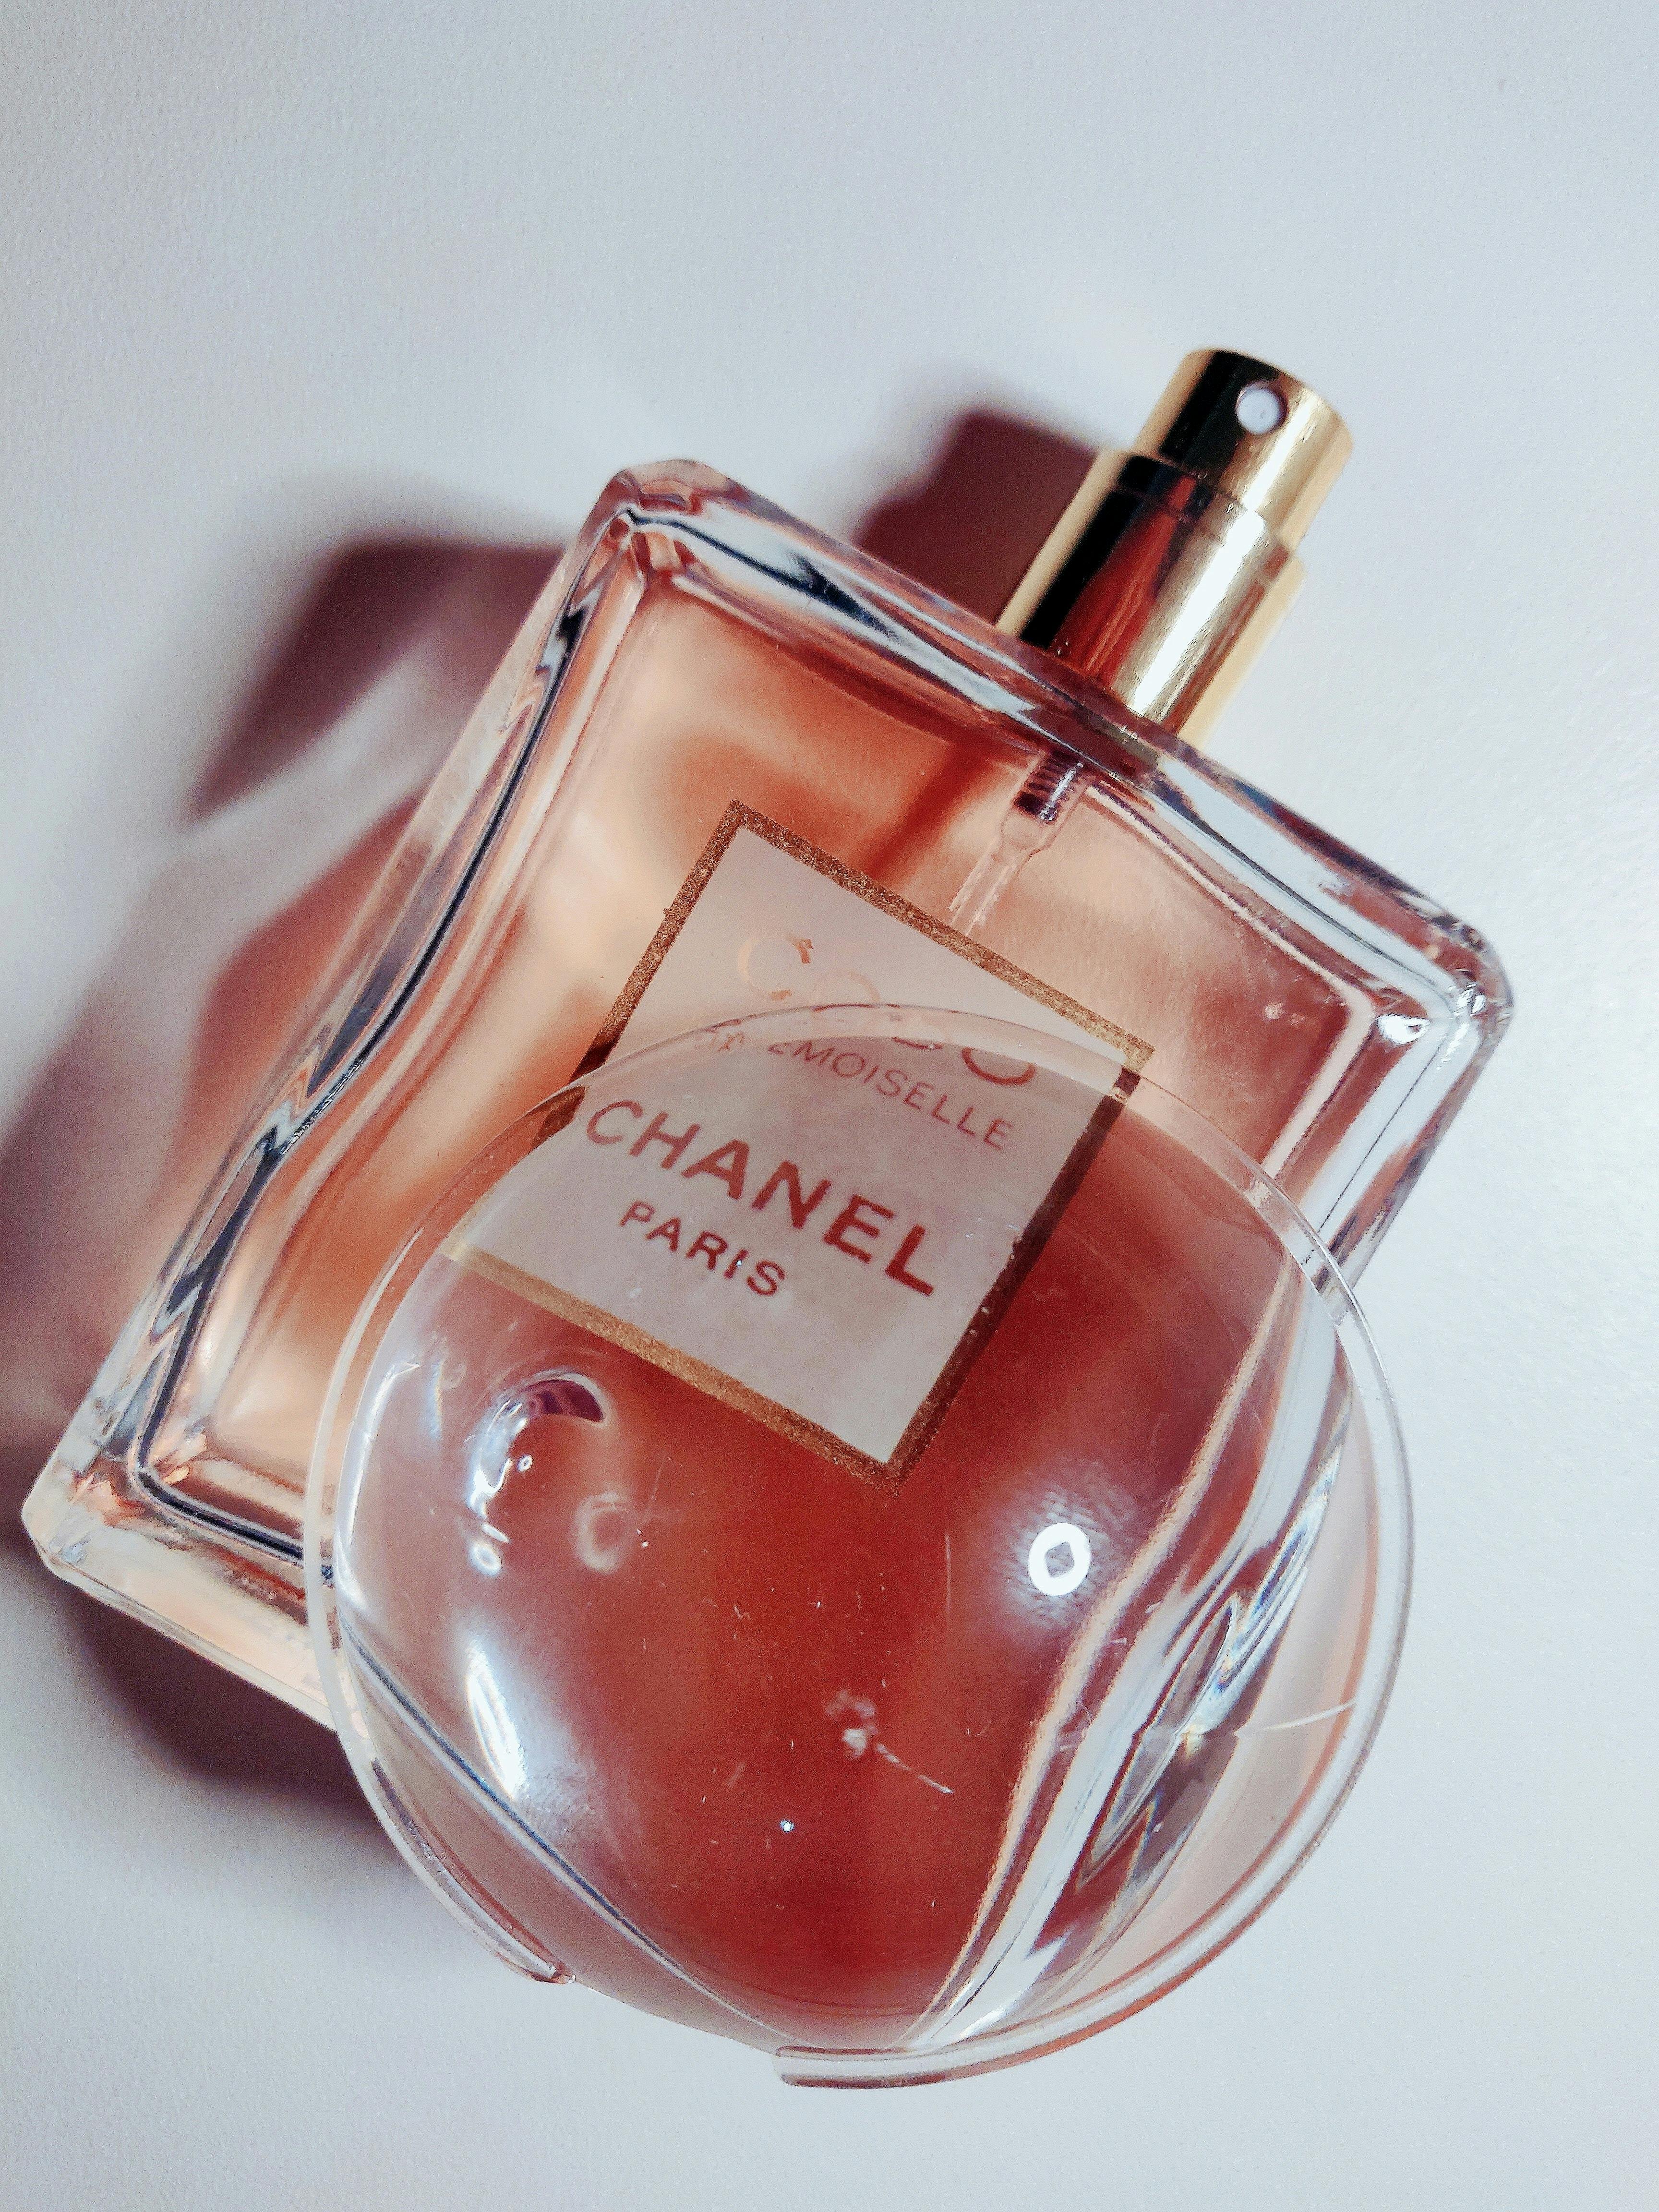 Coco Mademoiselle Chanel No. 5 Perfume, flat lay, cosmetics, fashion, chanel  png